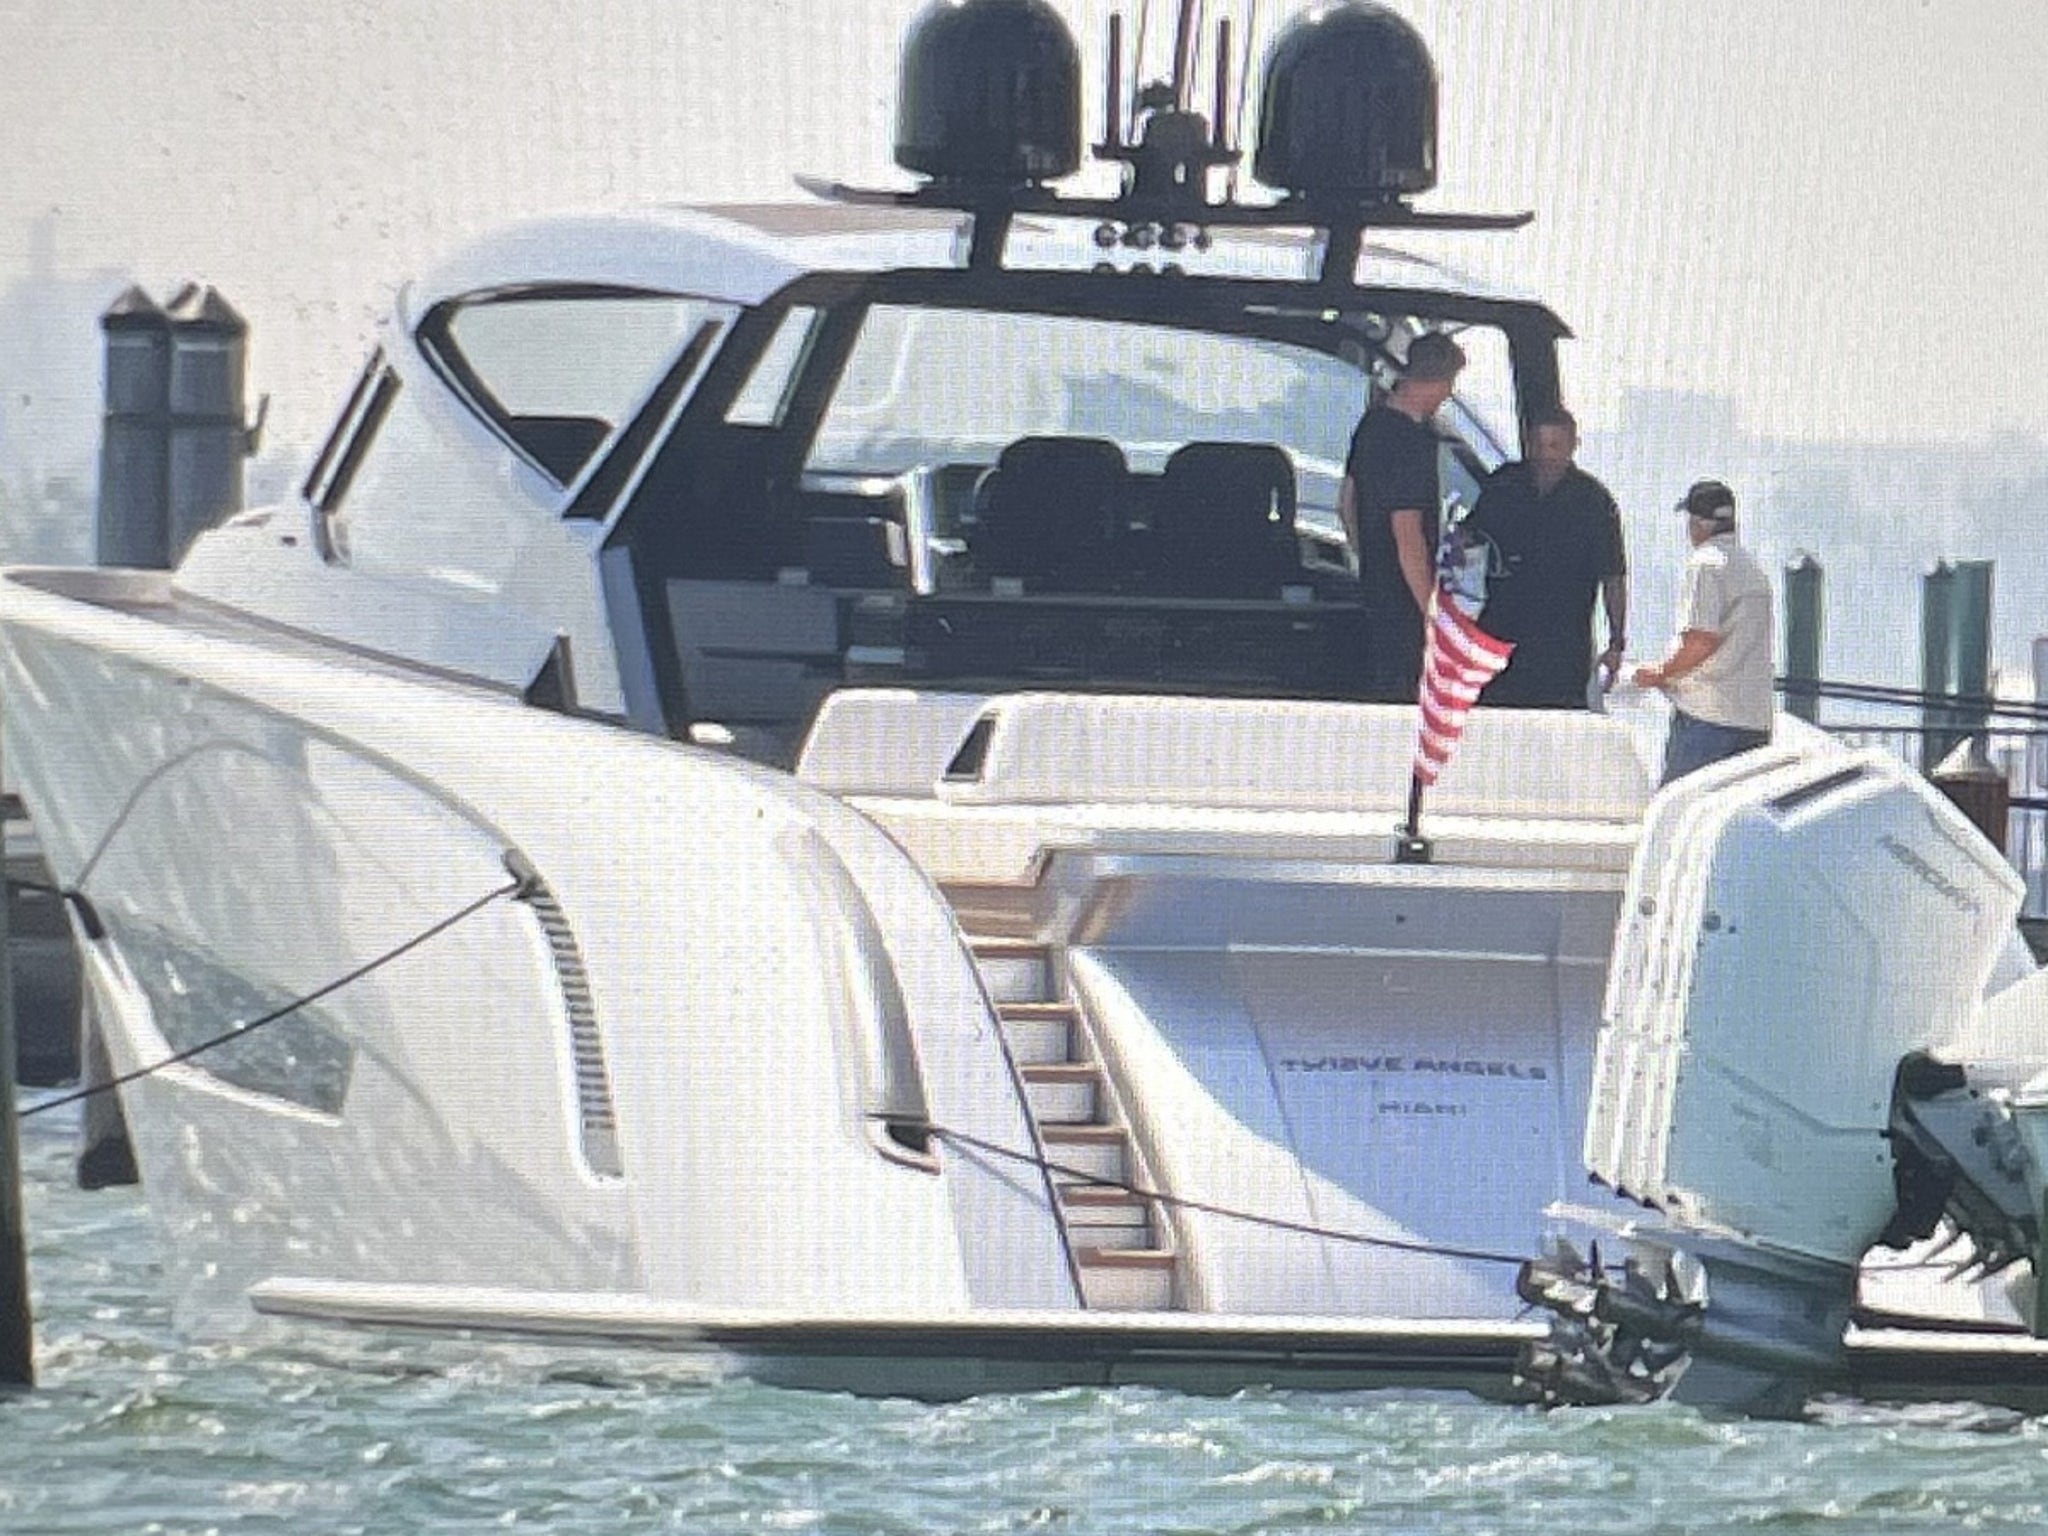 Is Tom Brady's Yacht Bigger Than the Titanic?